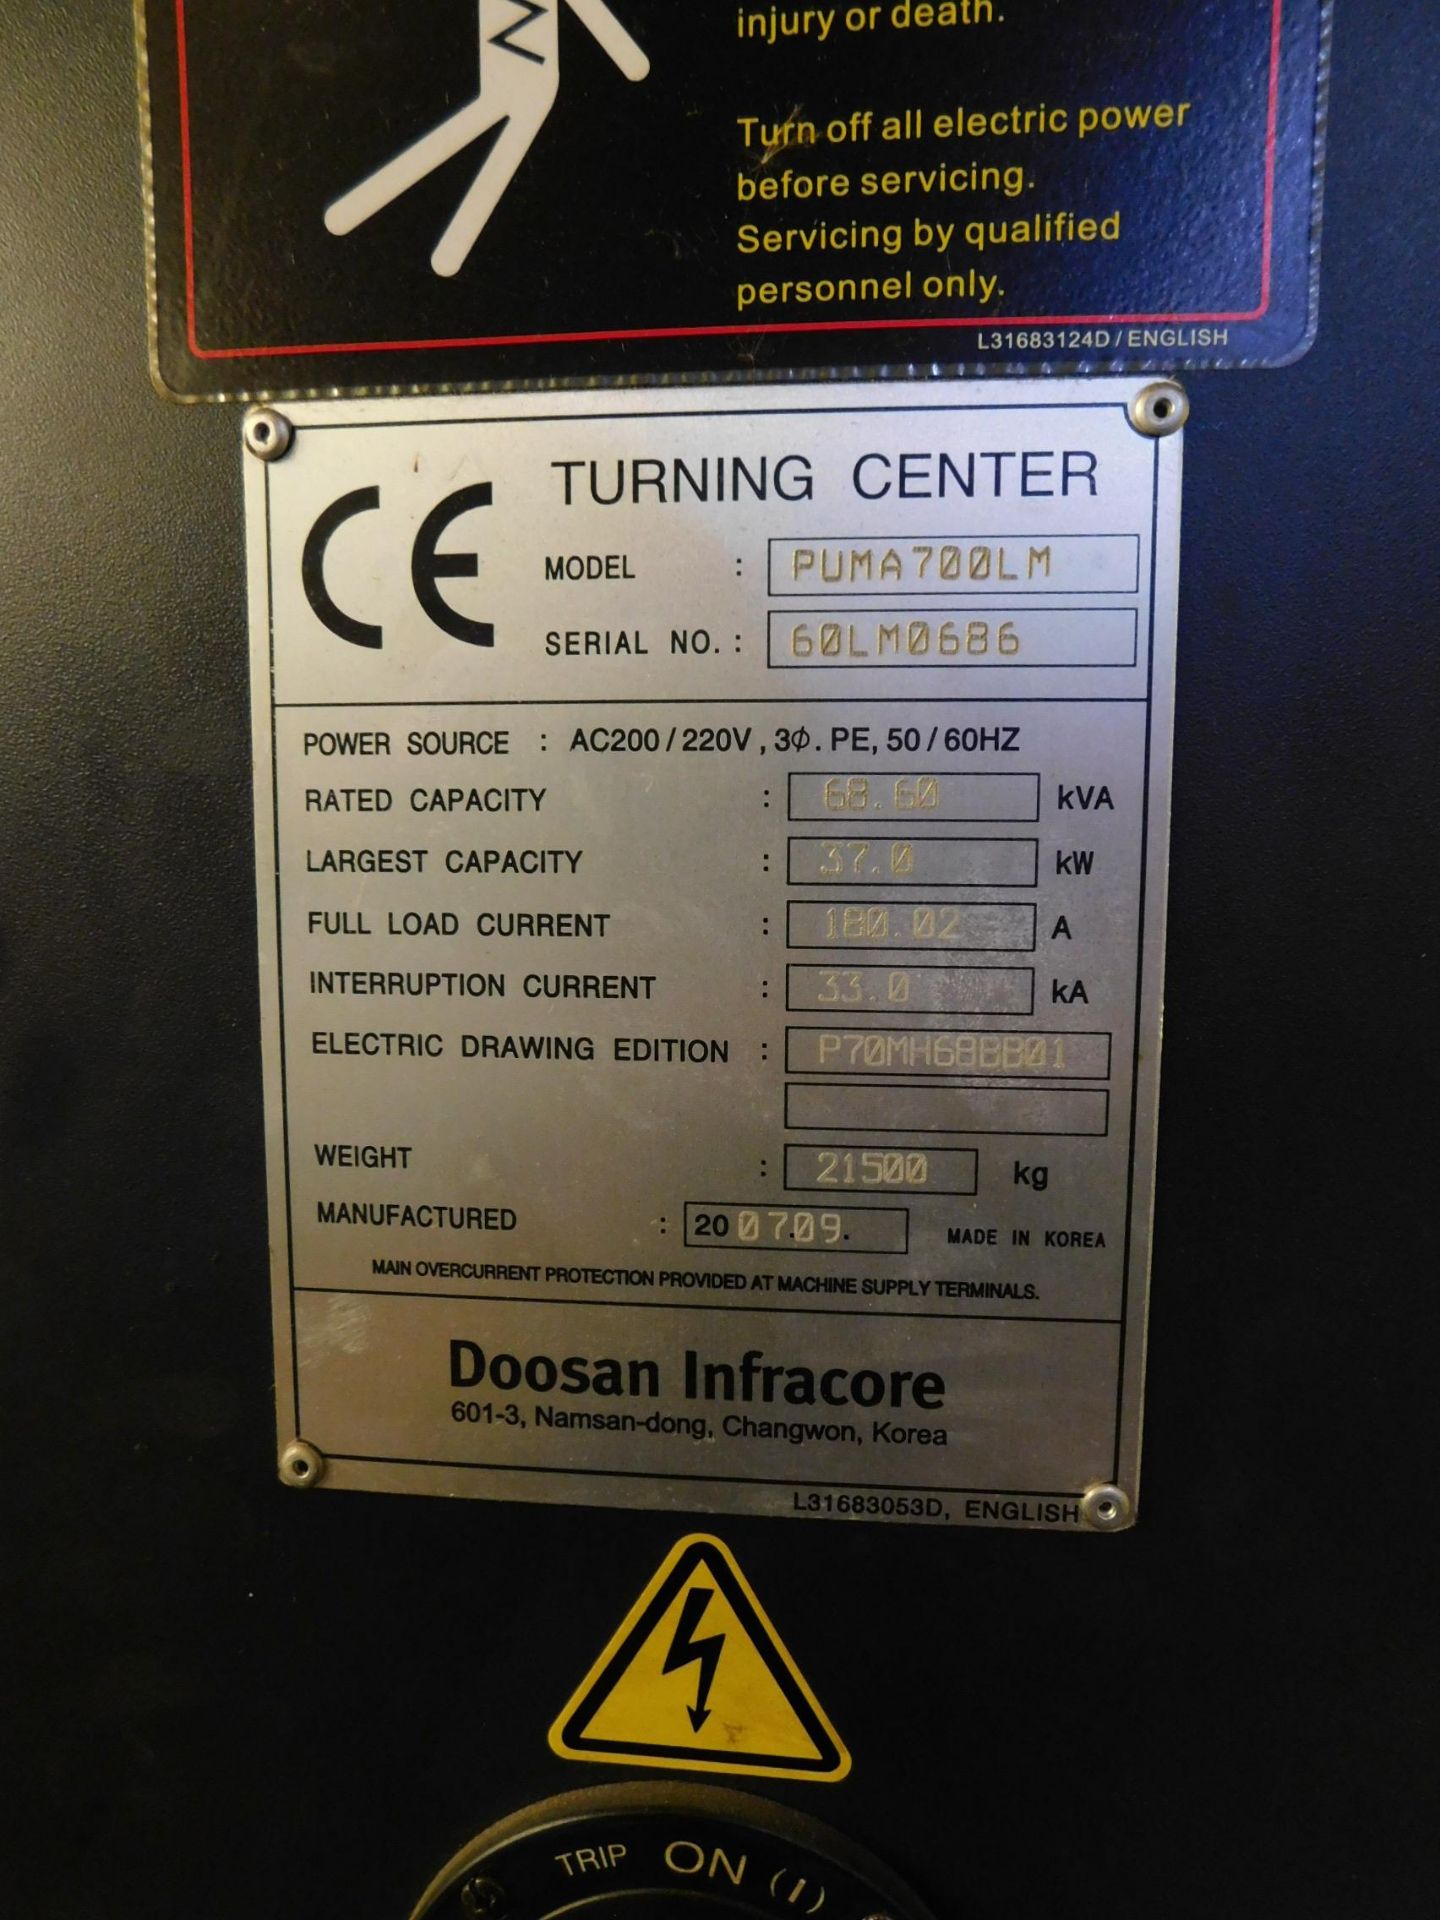 Doosan Model Puma 700LM CNC Turning Center, s/n 60LM 0686, New 2007, Fanuc 21-TB CNC Control, 24” - Image 14 of 17